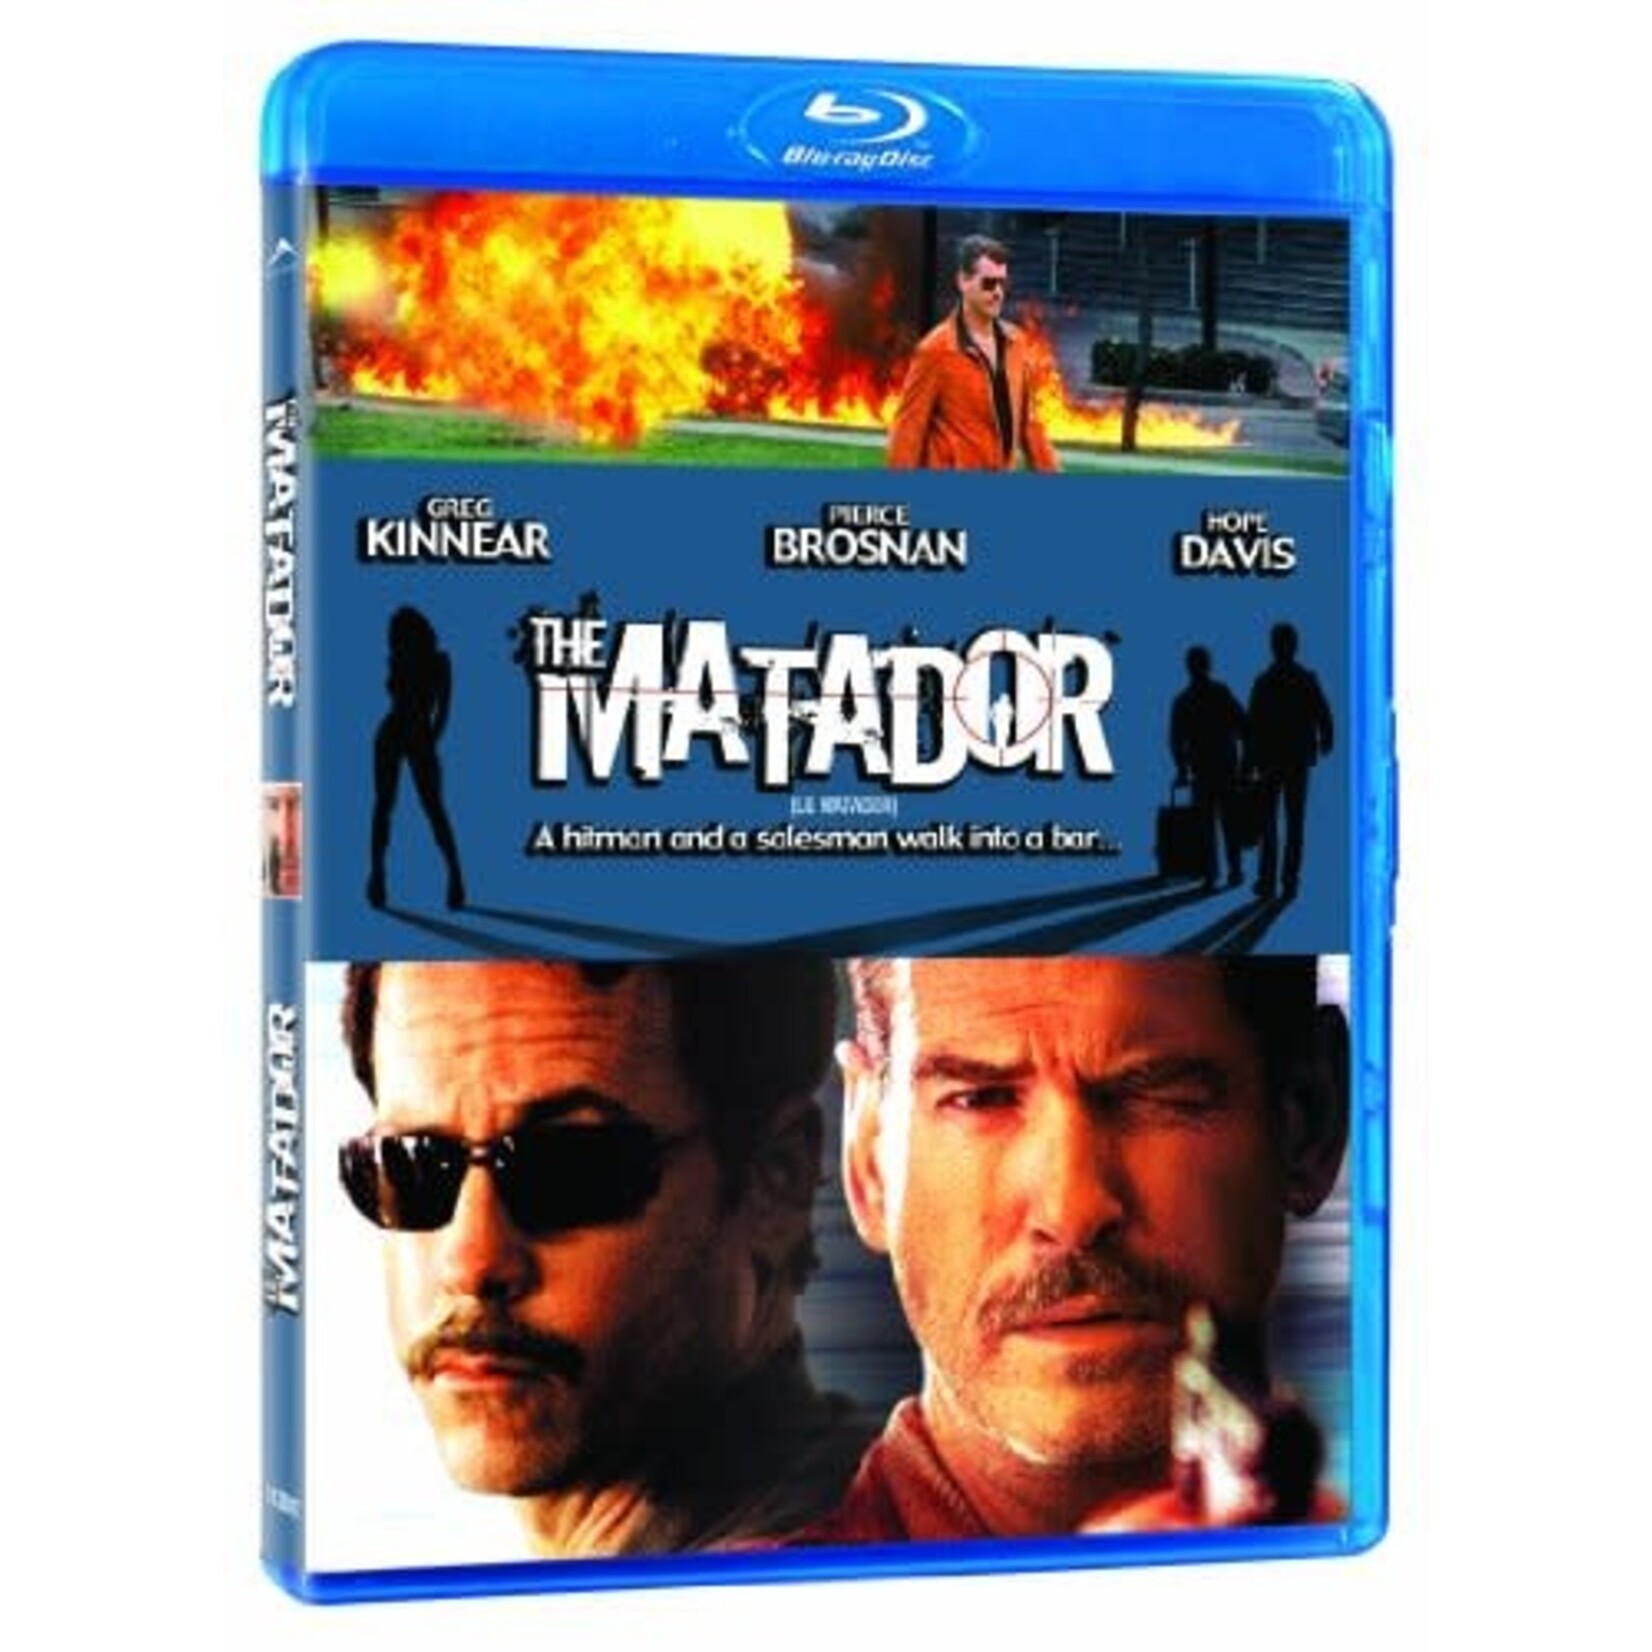 Matador (2005) [USED BRD]